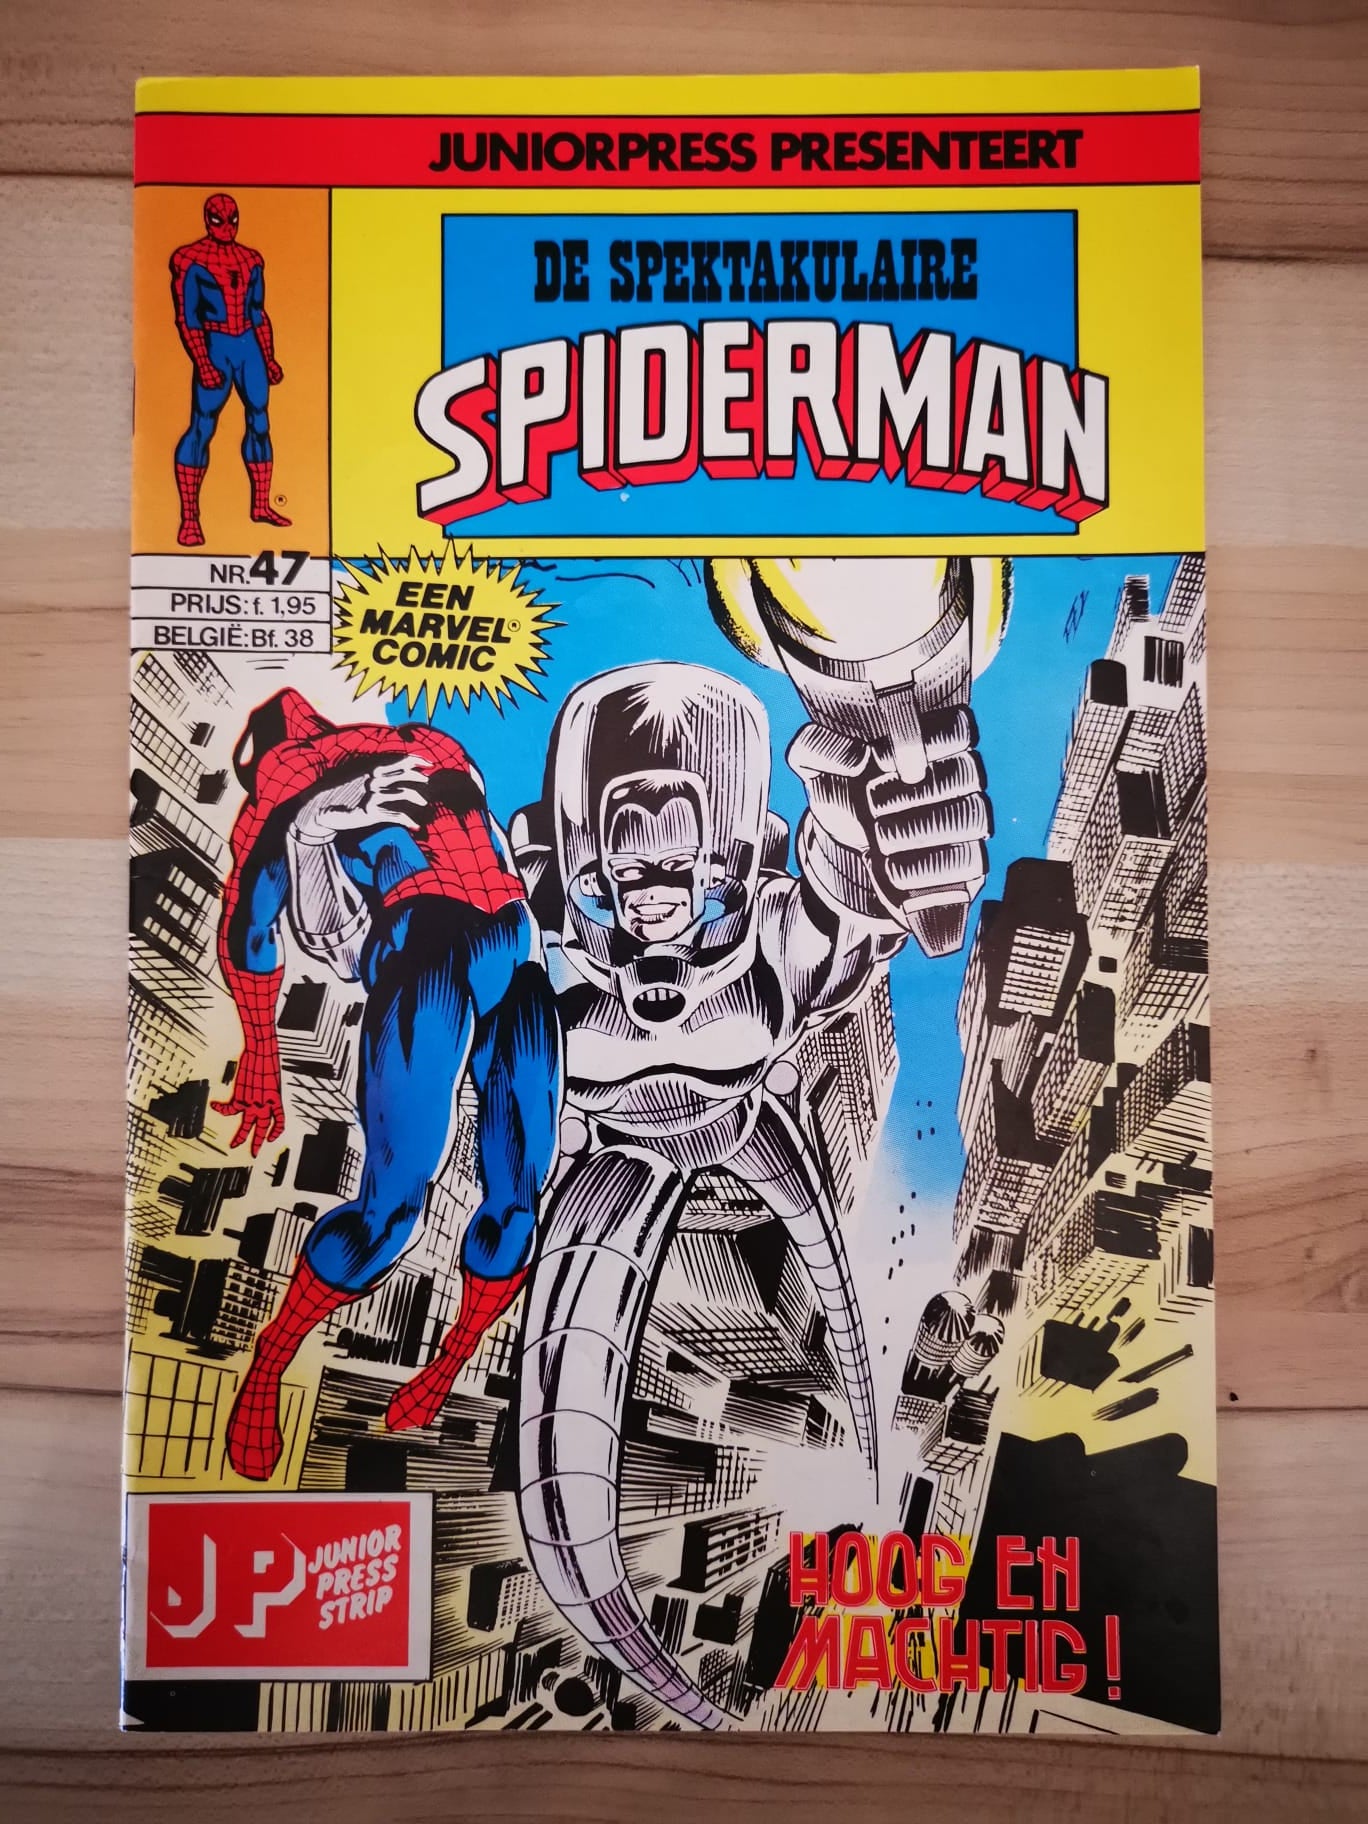 De spektakulaire spiderman #47